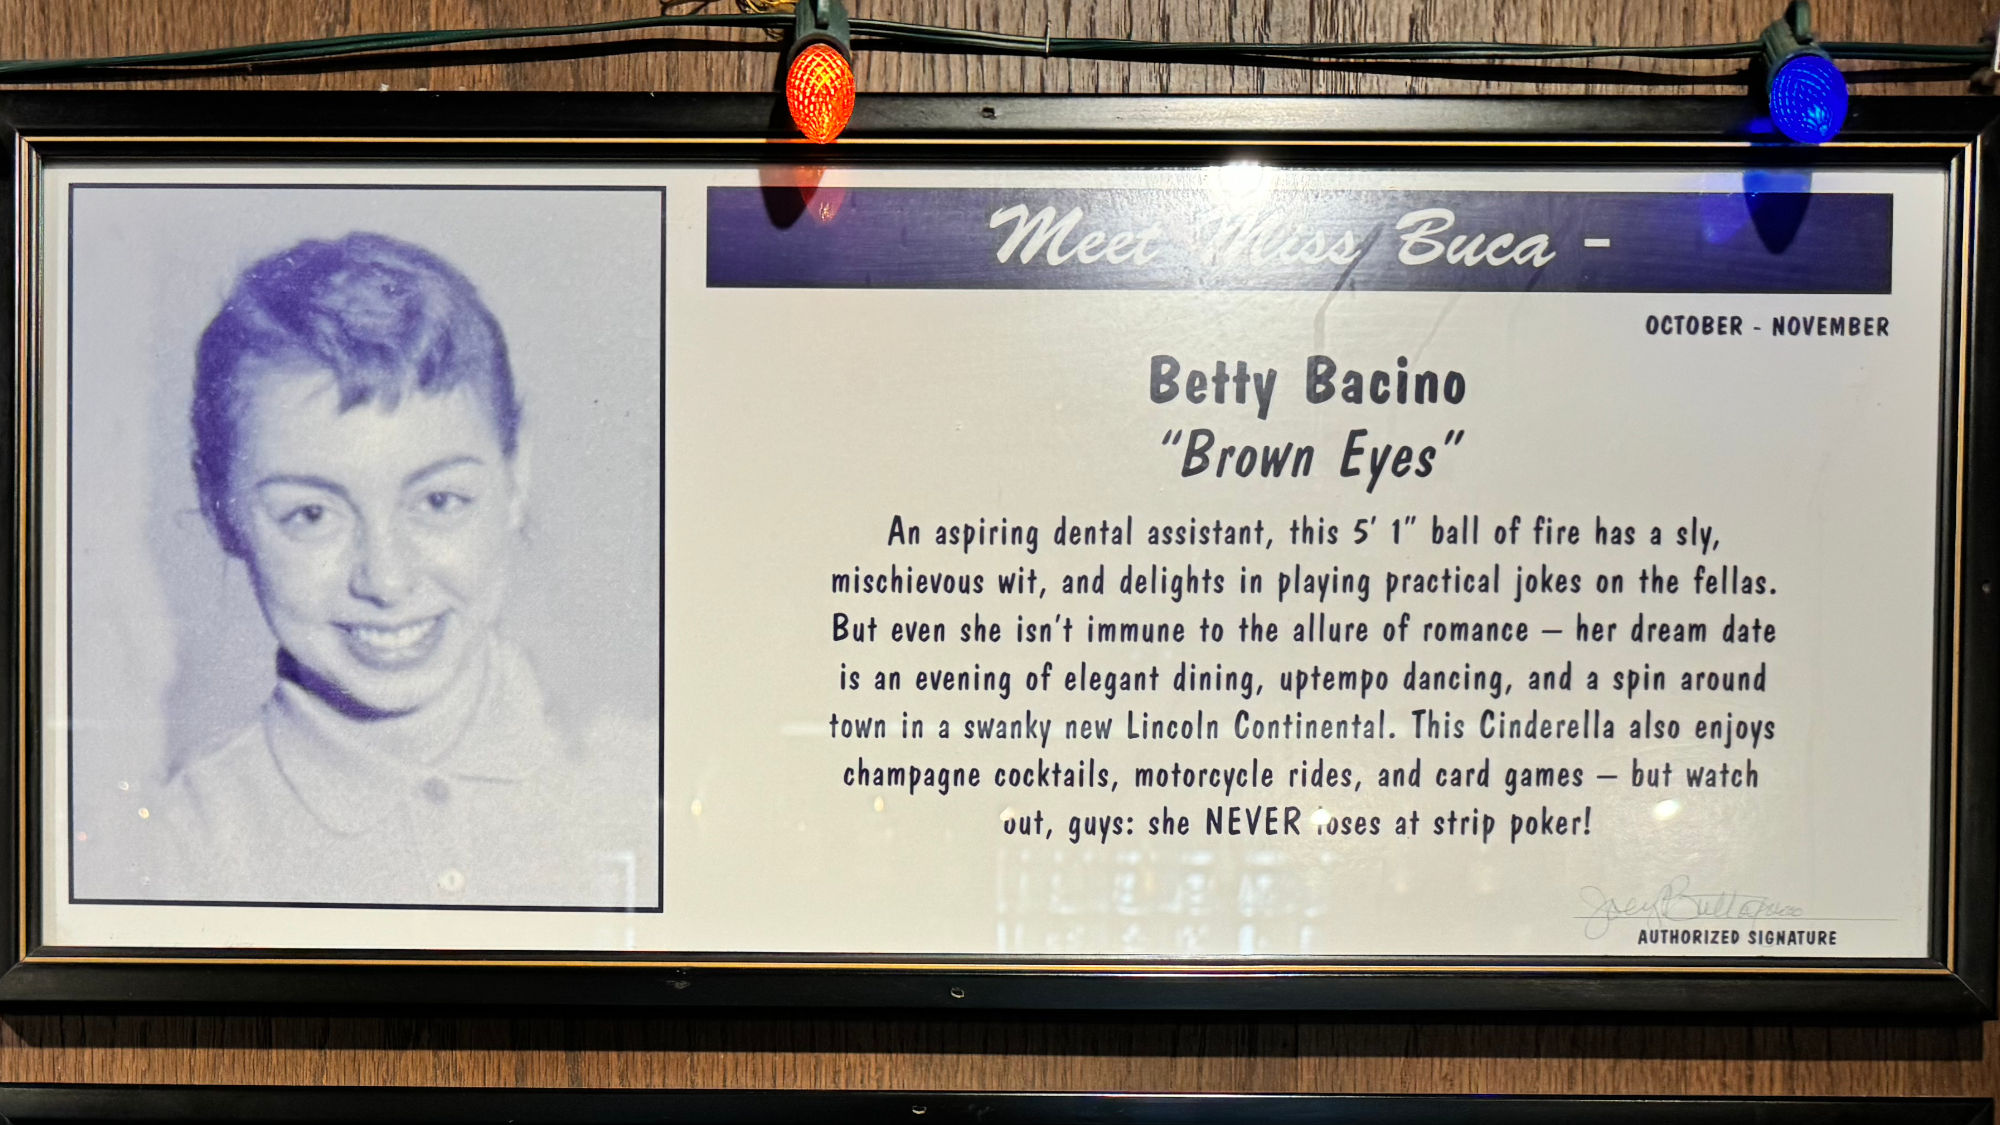 Meet Miss Buca Betty Bacino